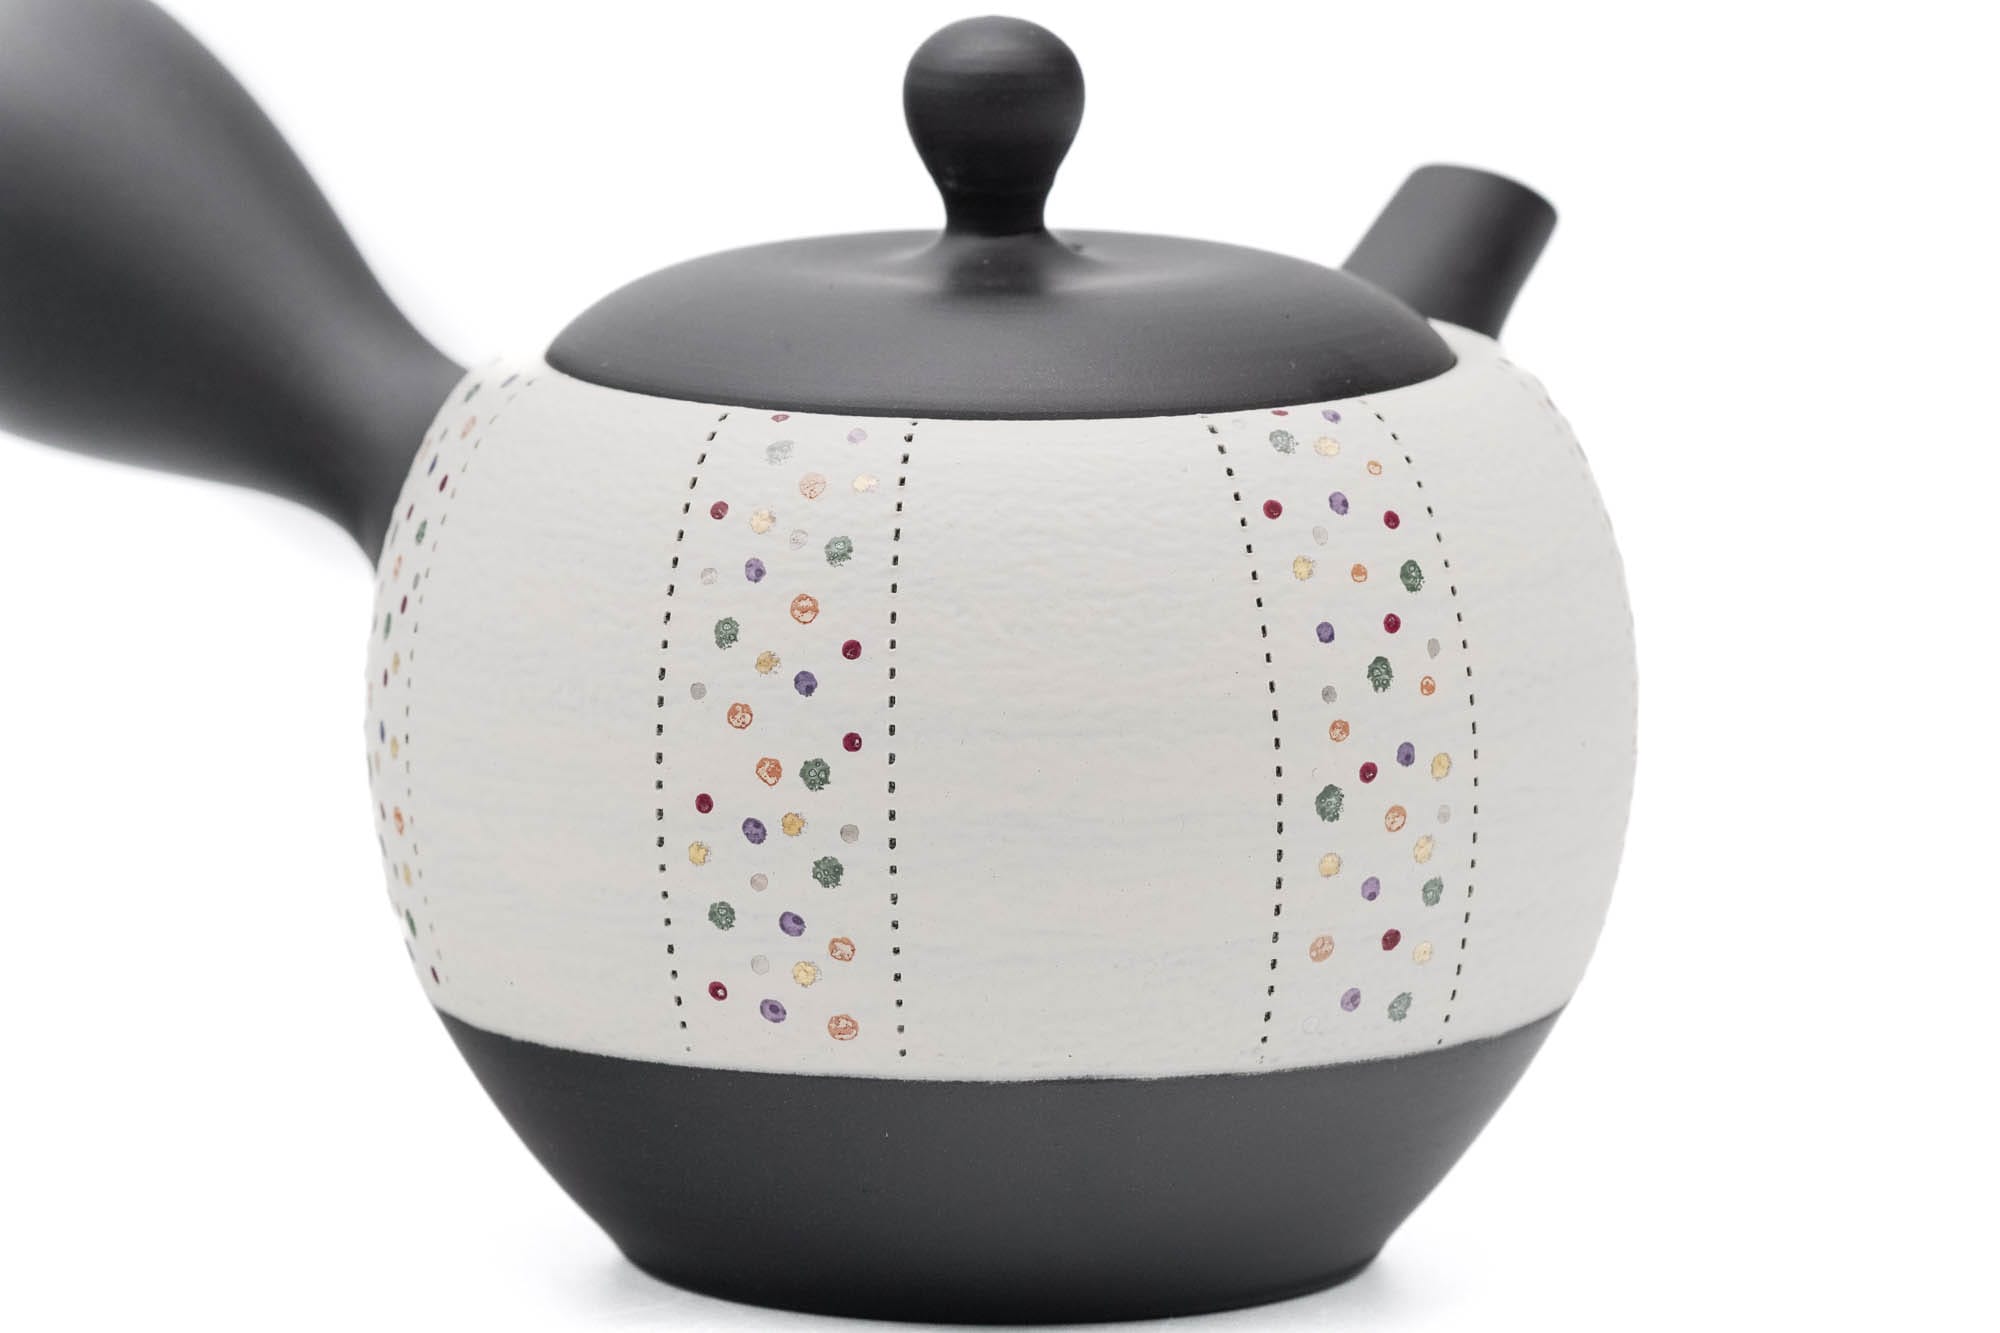 Japanese Kyusu - 昭萠窯 Shōhō Kiln - Black White Pearlescent Dots Tokoname-yaki Teapot - 300ml